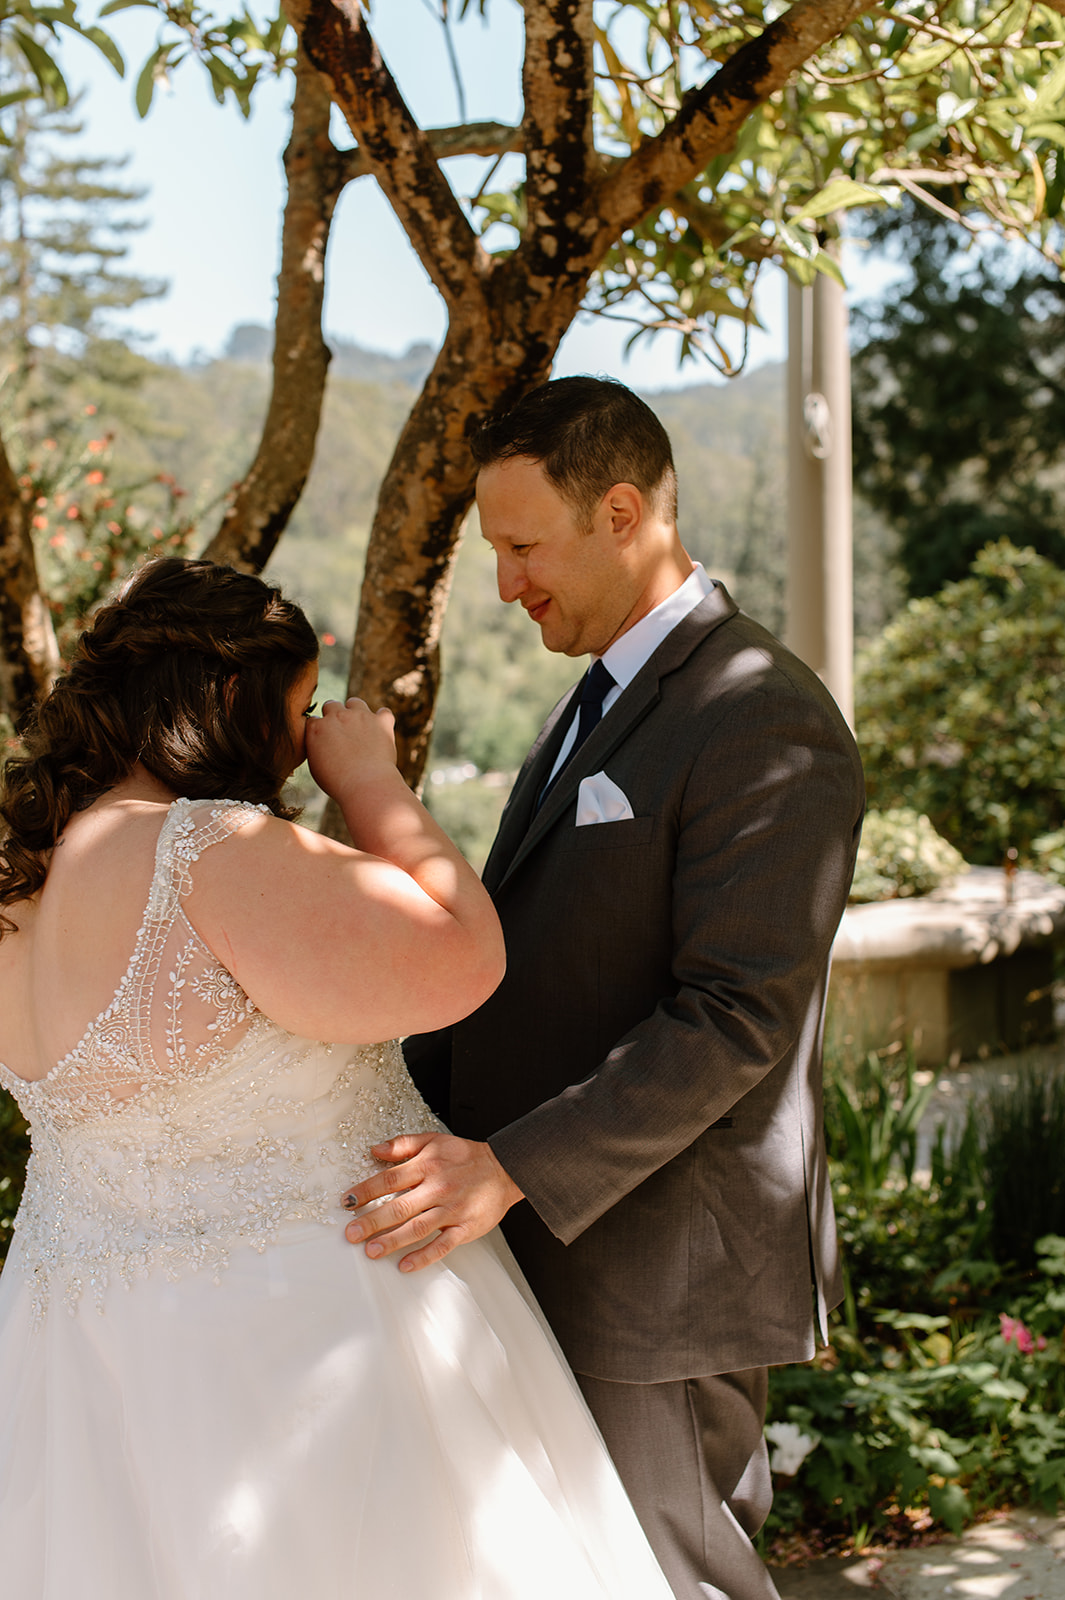 Sydney Jai Wedding Photographer - Bride and groom photos, Berkeley California wedding, bride first look